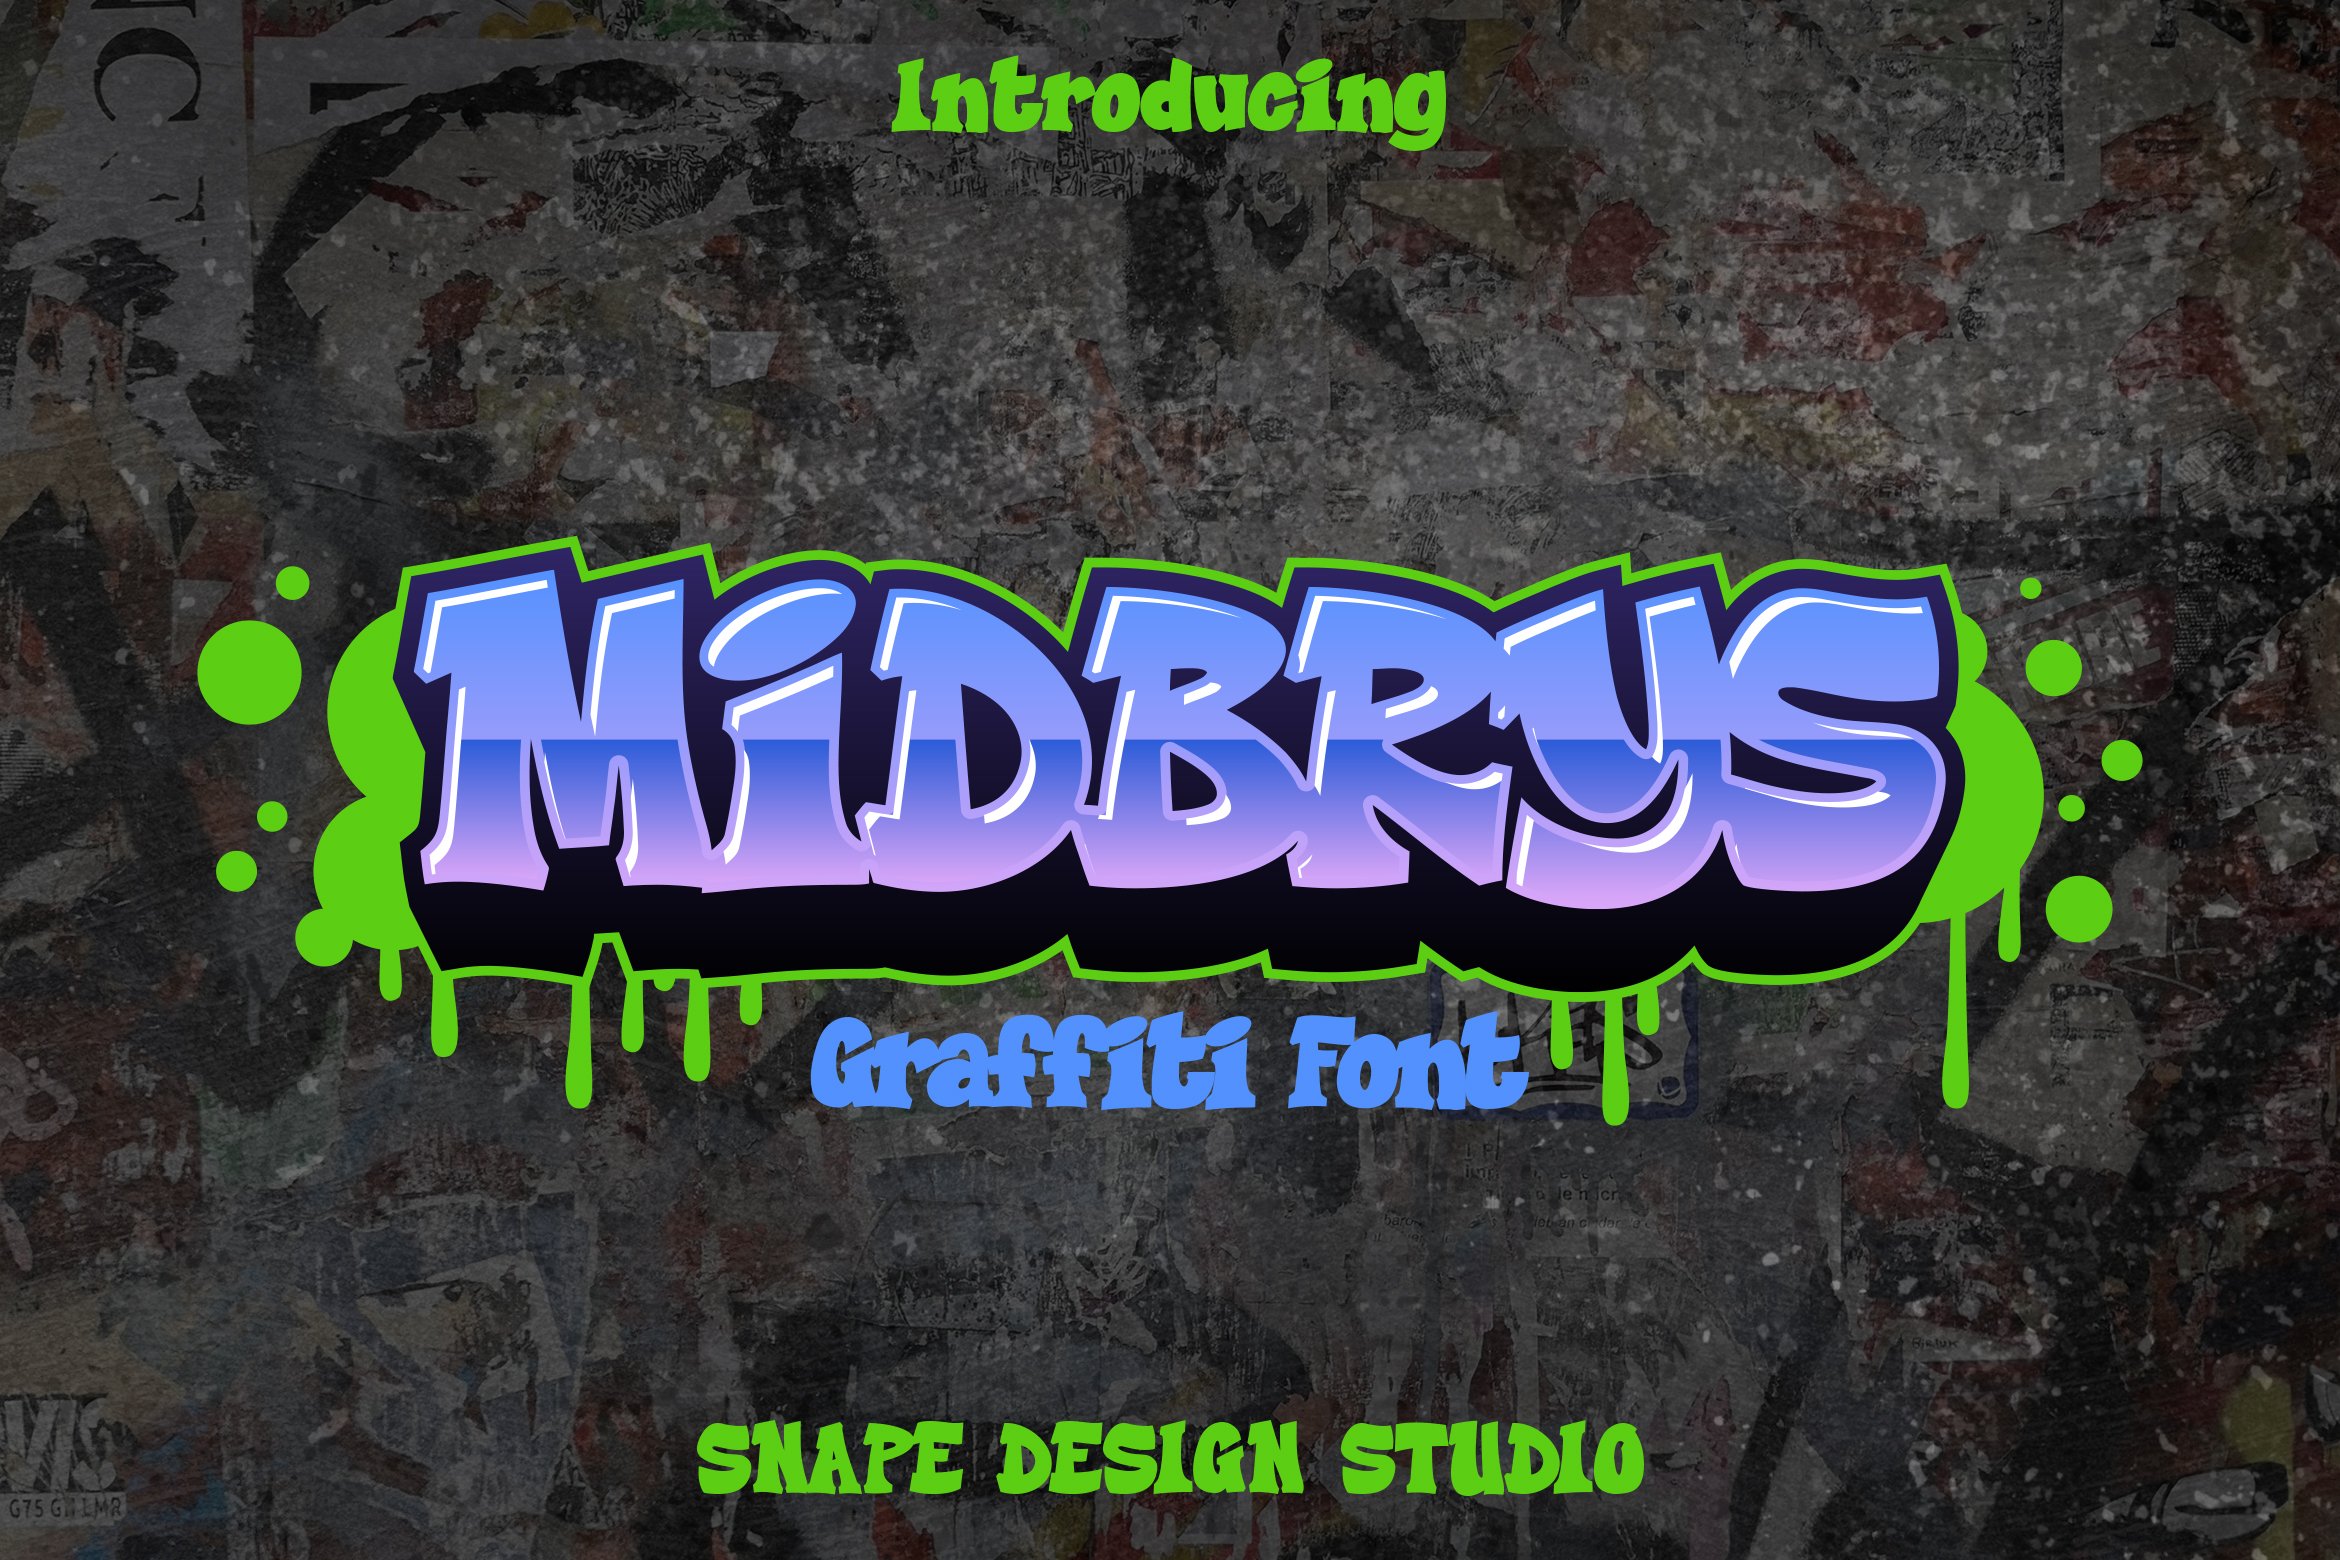 Midbrys - Graffiti Font cover image.